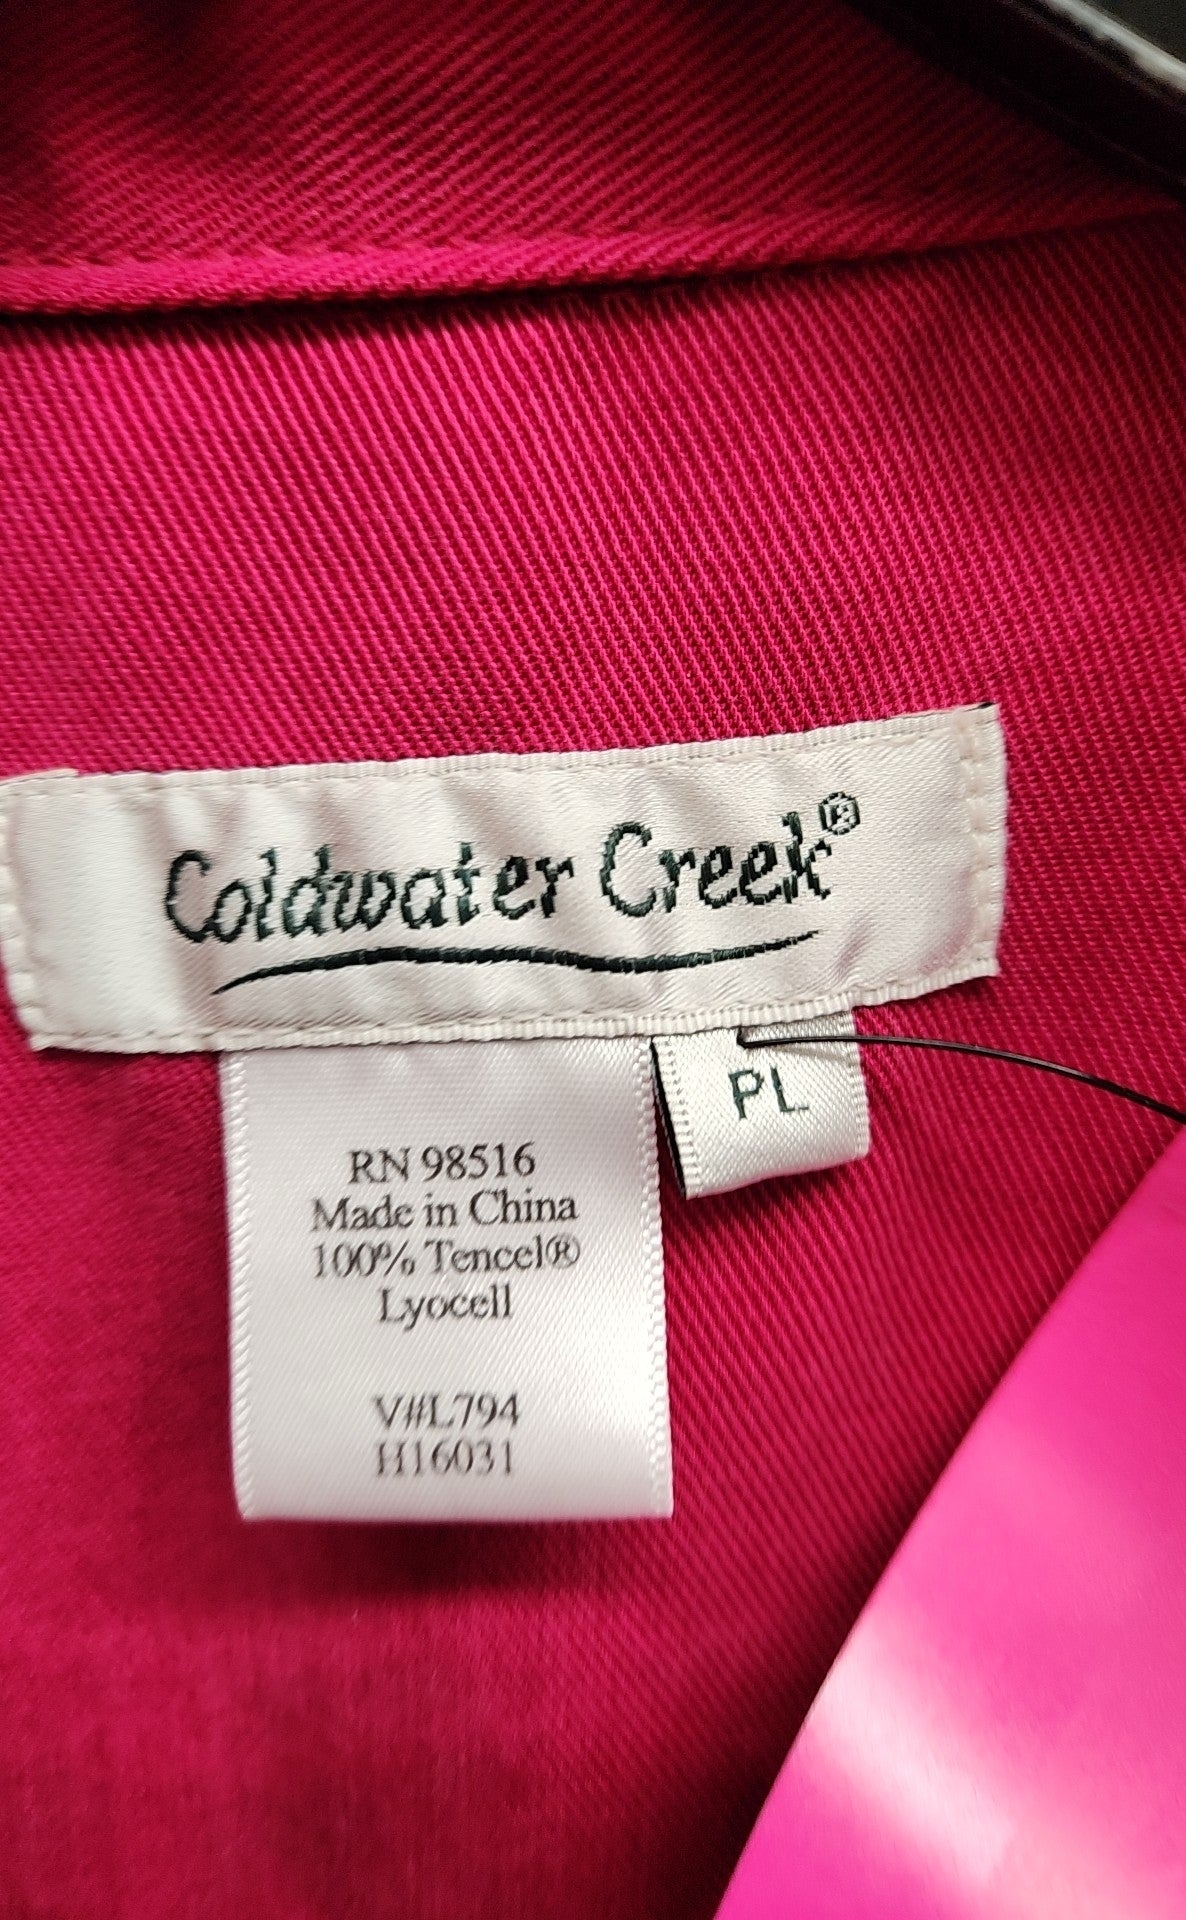 Coldwater Creek Women's Size L Petite Pink Jacket